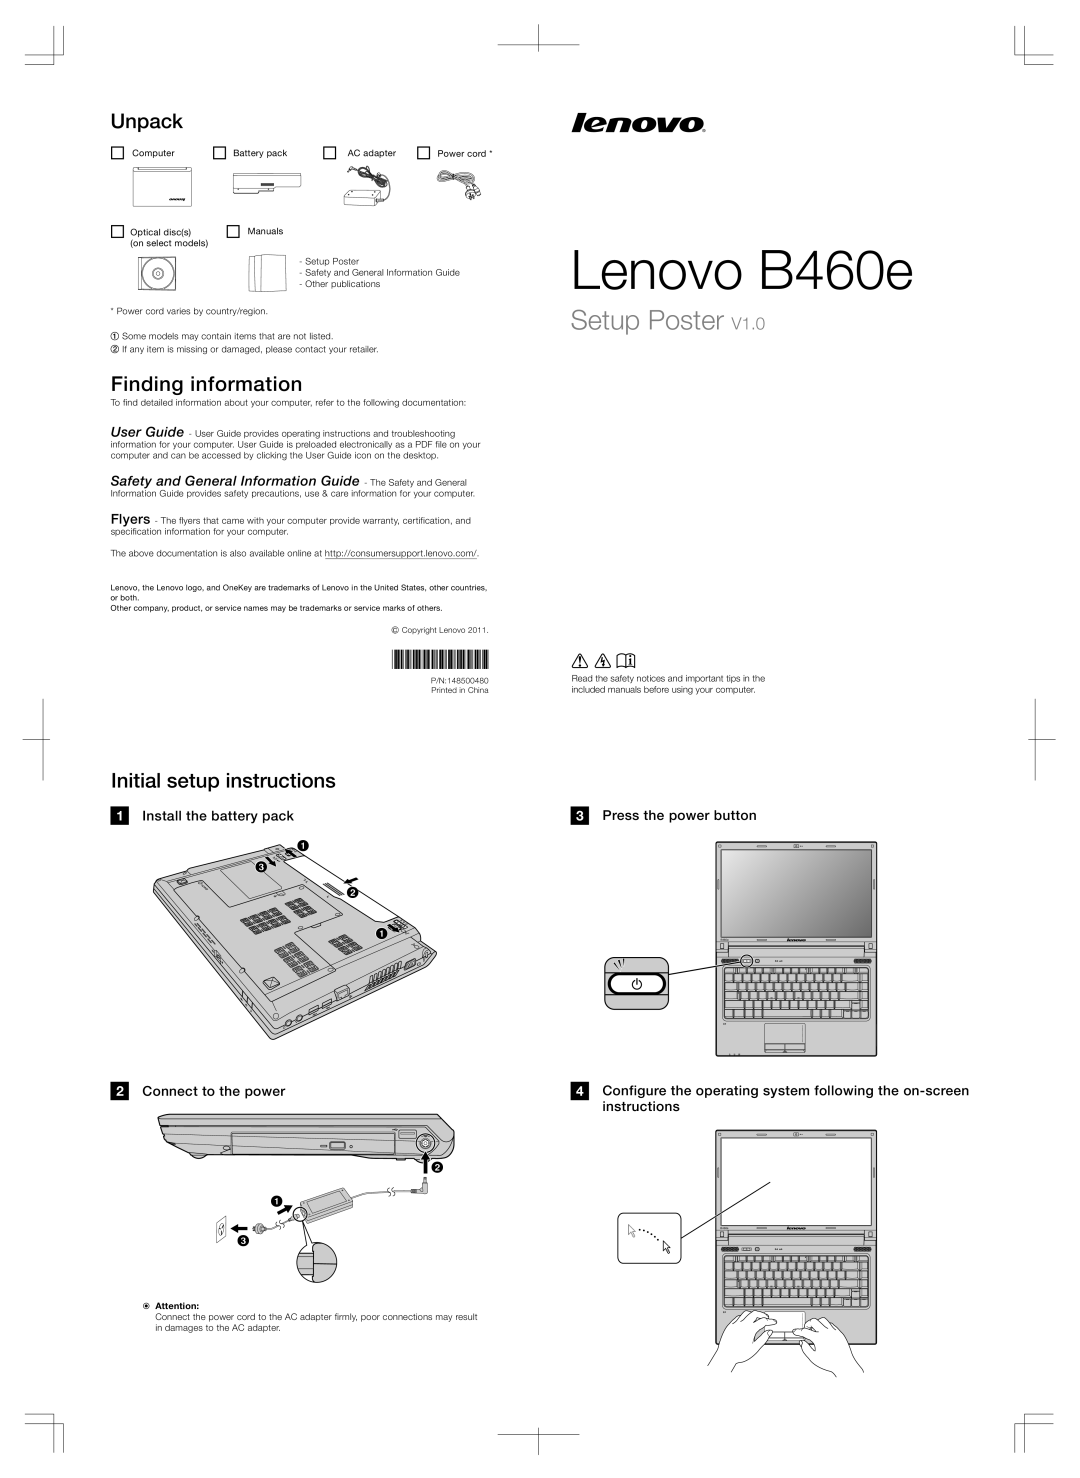 Lenovo B460E warranty Unpack, Finding information, Initial setup instructions, Install the battery pack, Lenovo B460e 